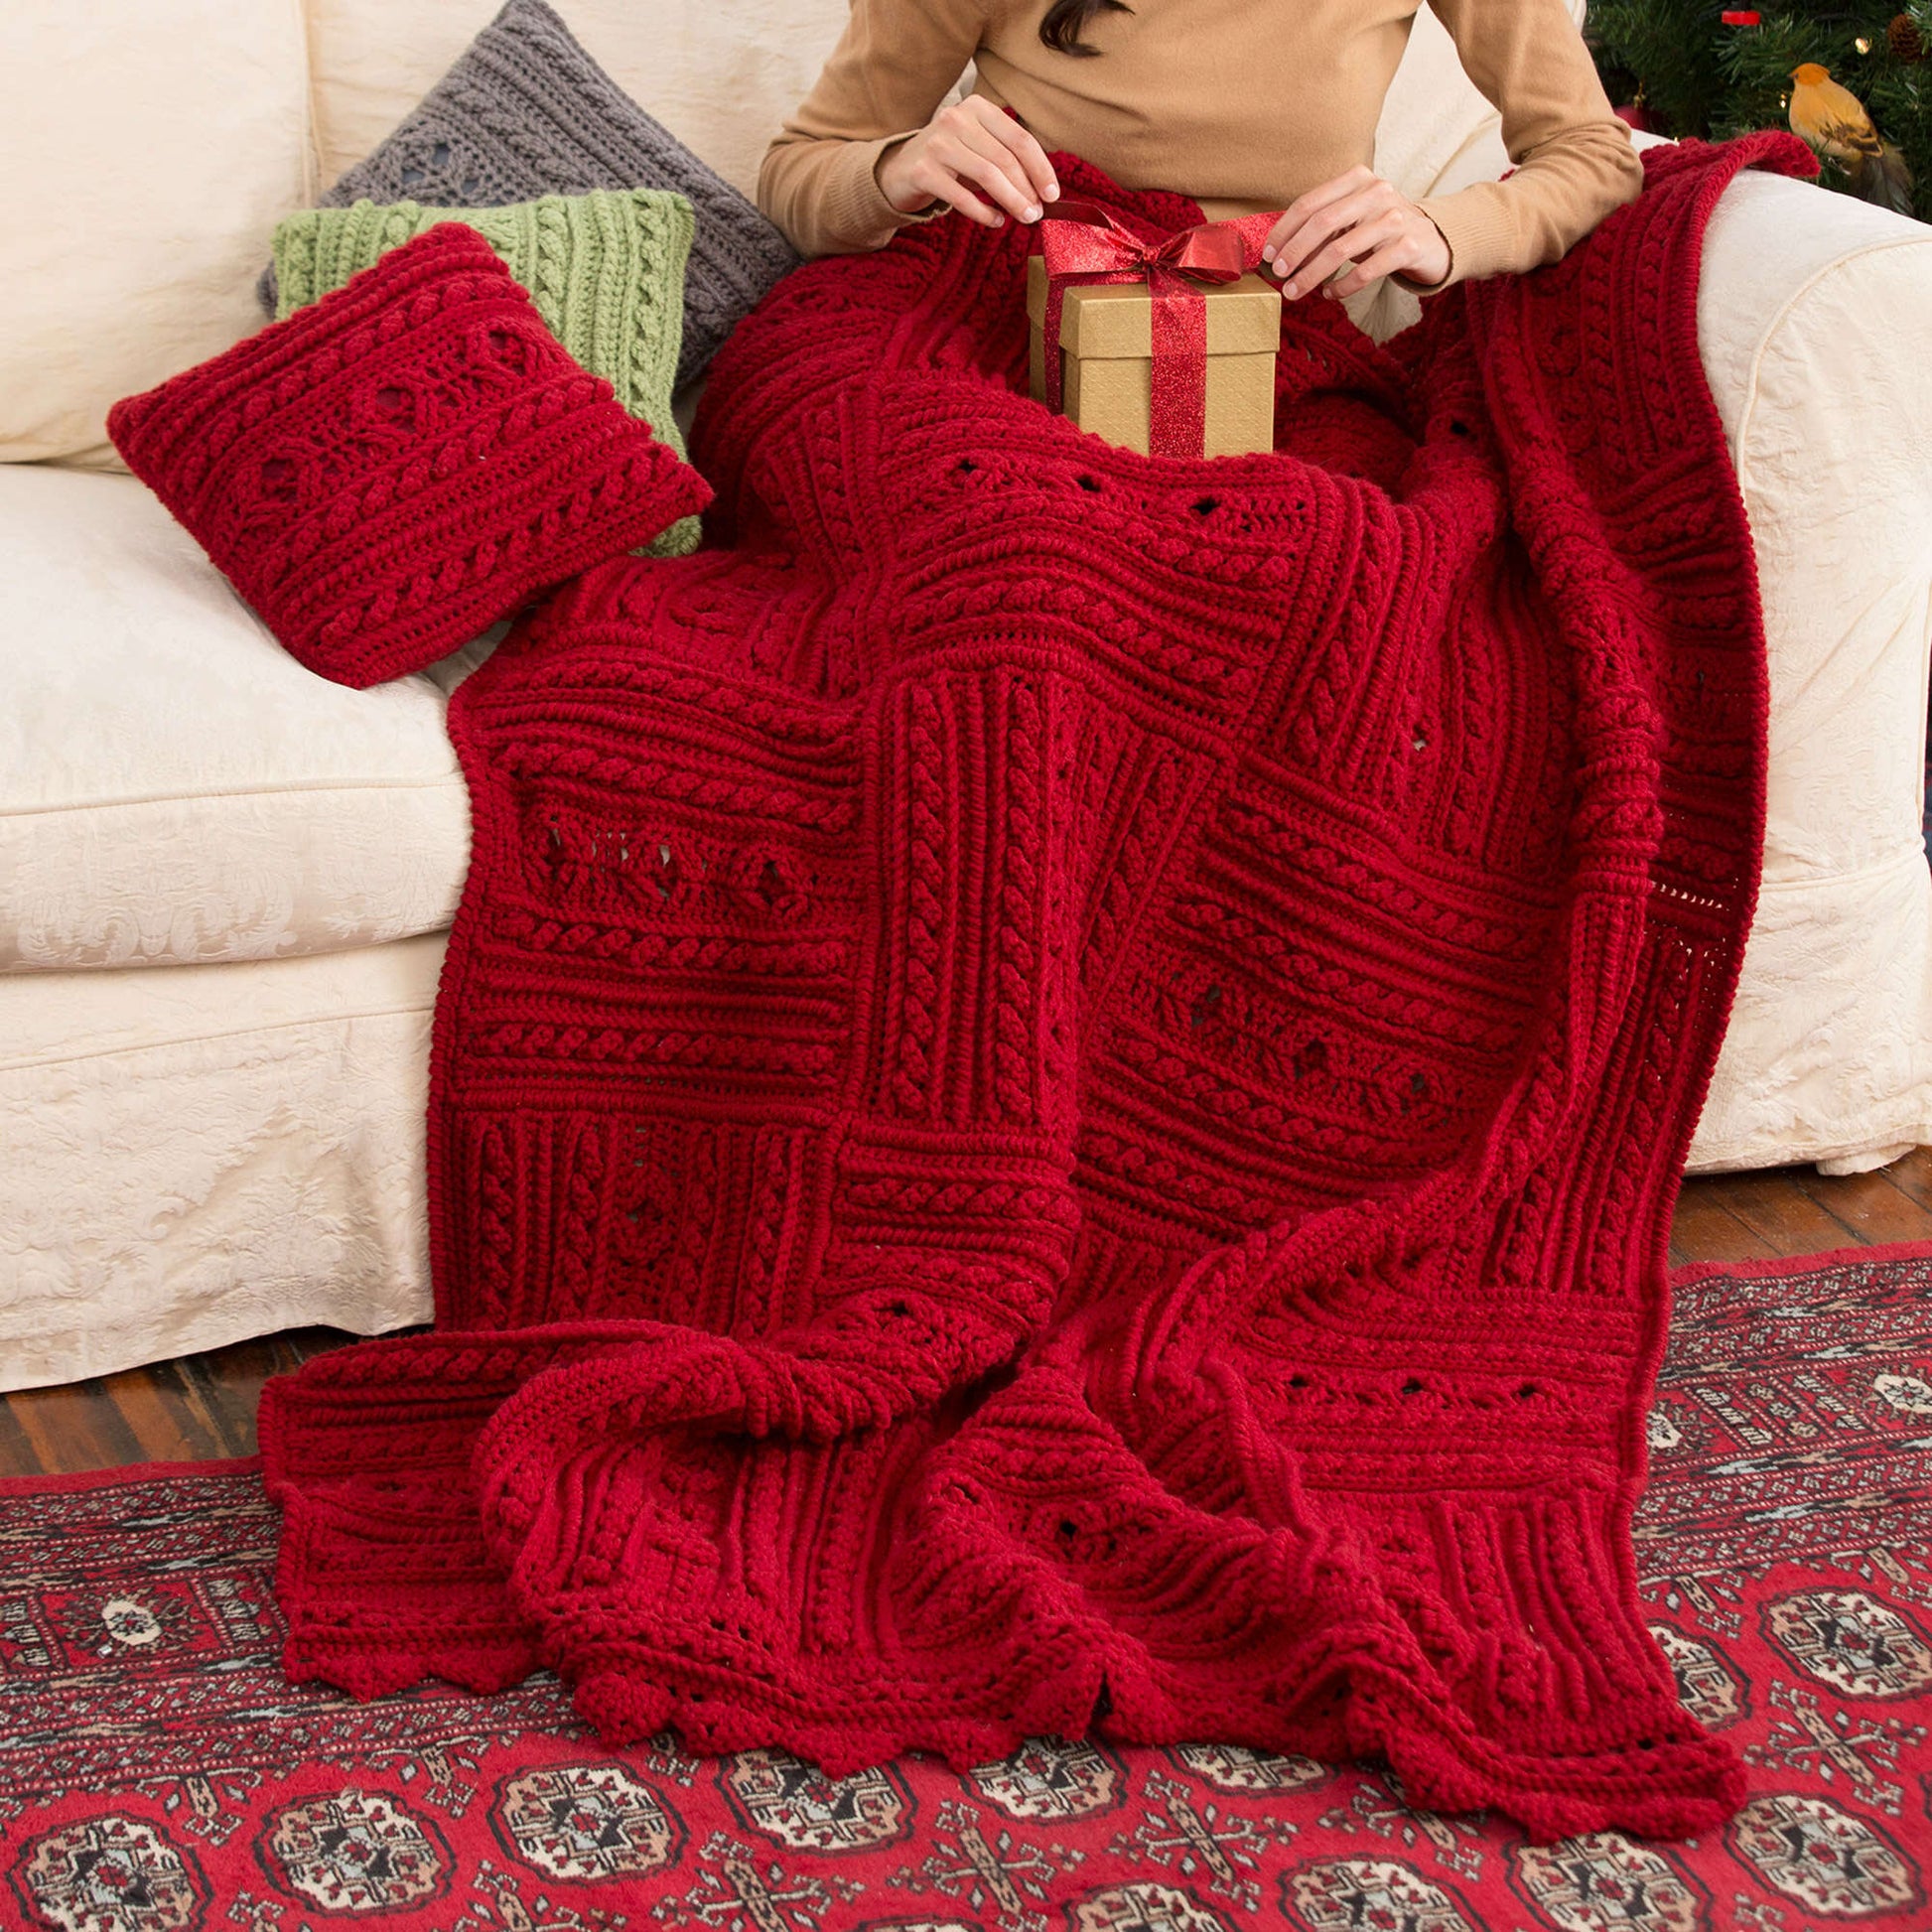 Free Red Heart Divine Textured Throw & Pillows Crochet Pattern